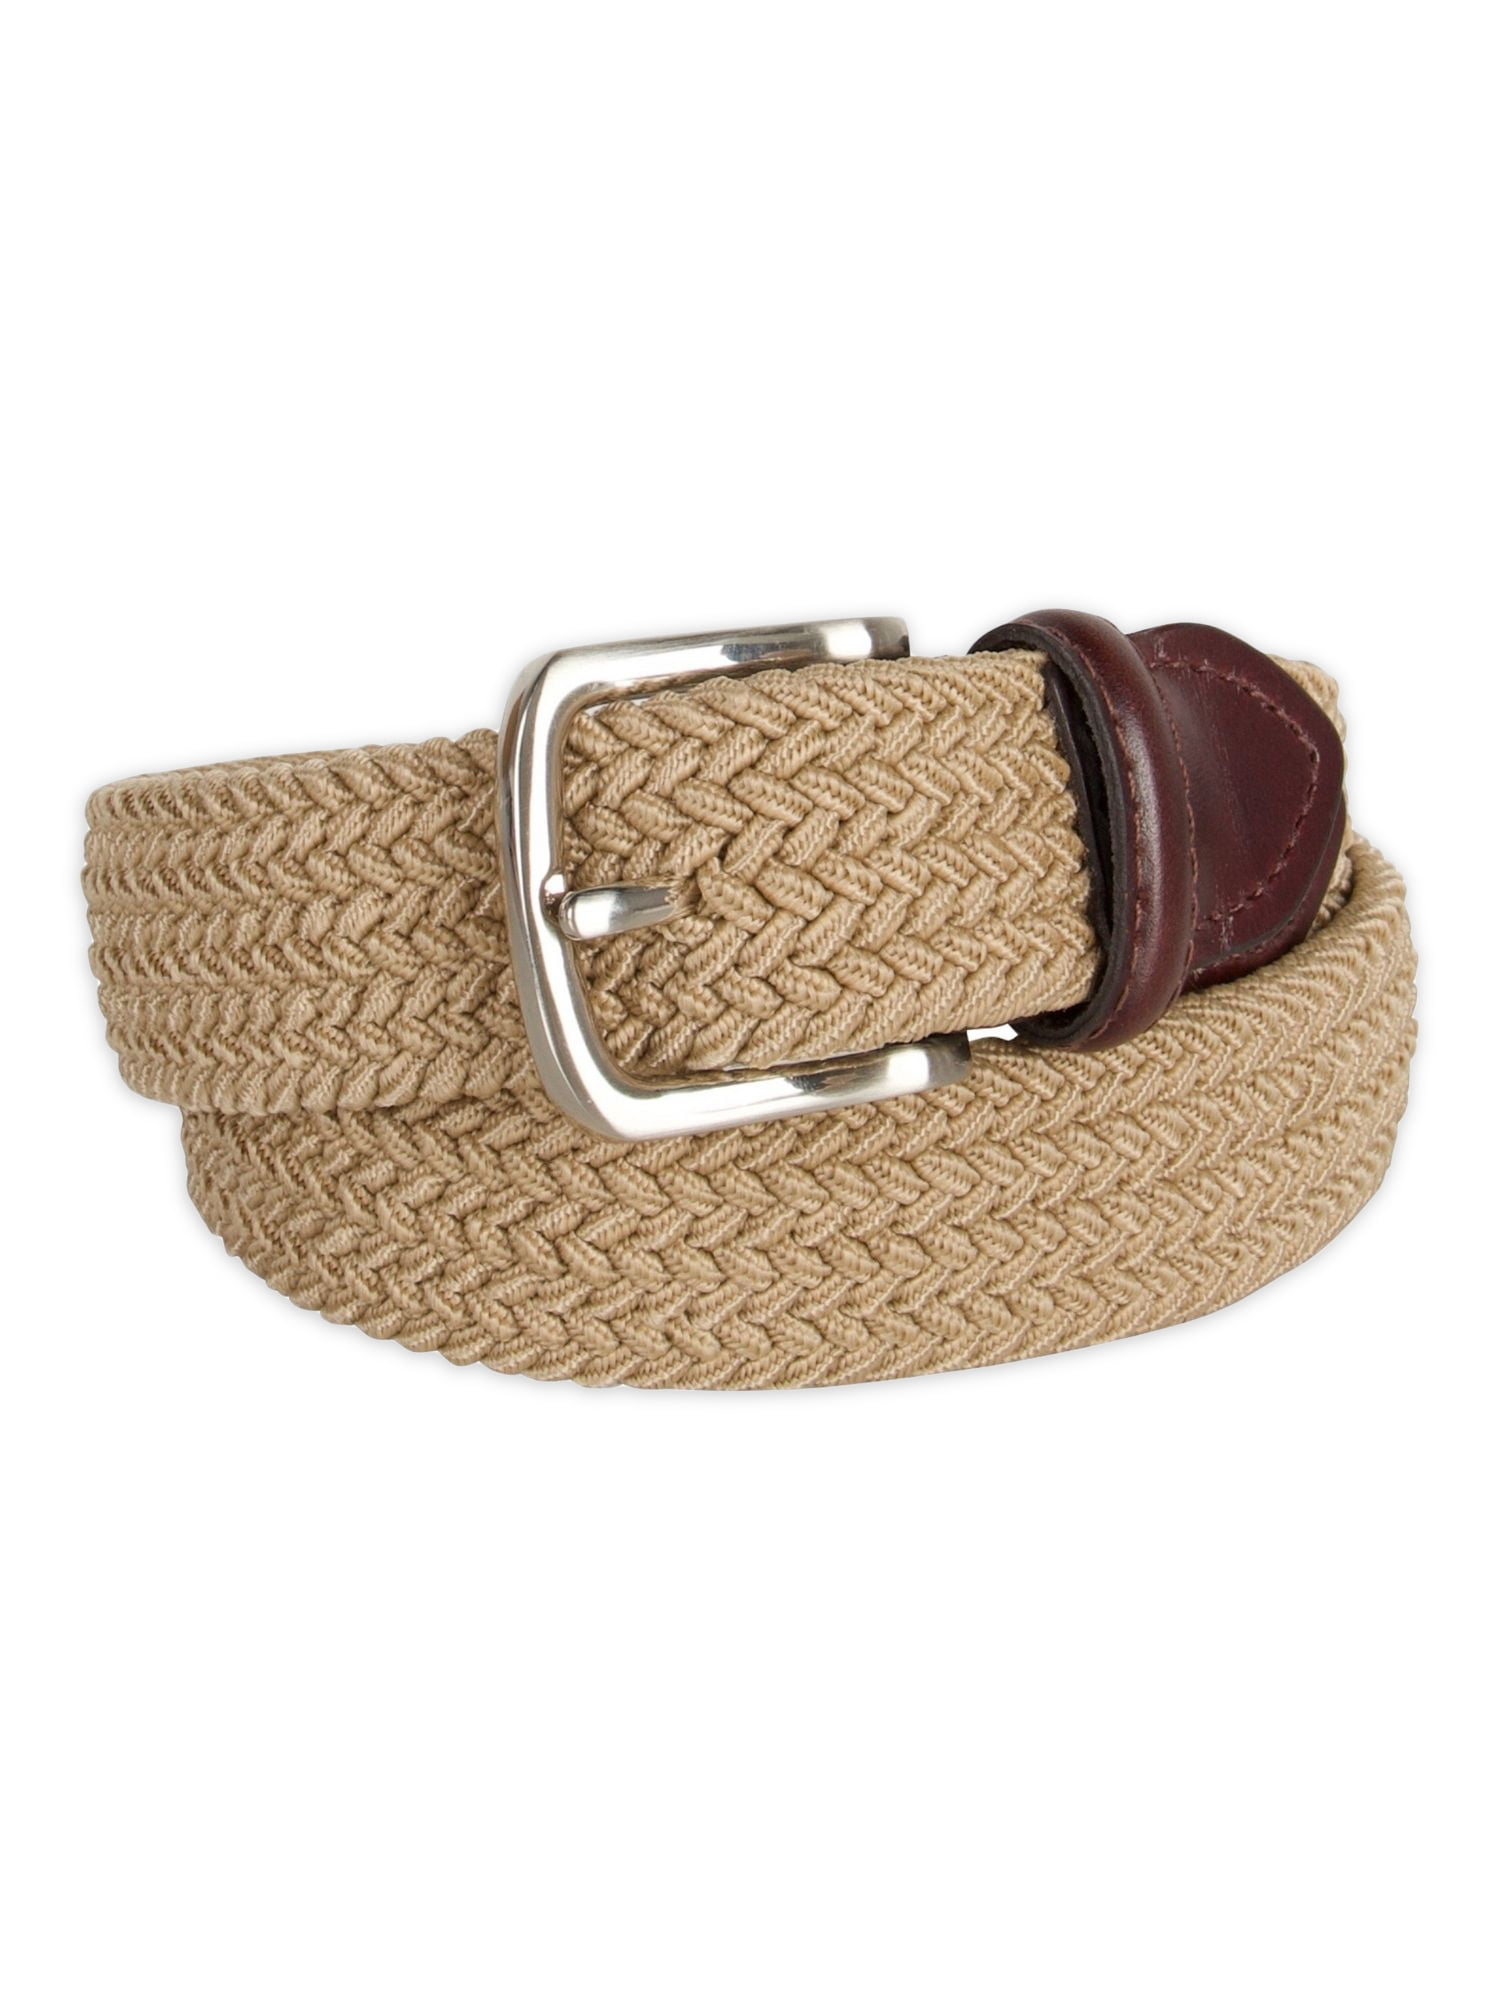 DOCKERS CASUAL - Braided belt - Brown/brown - Zalando.de